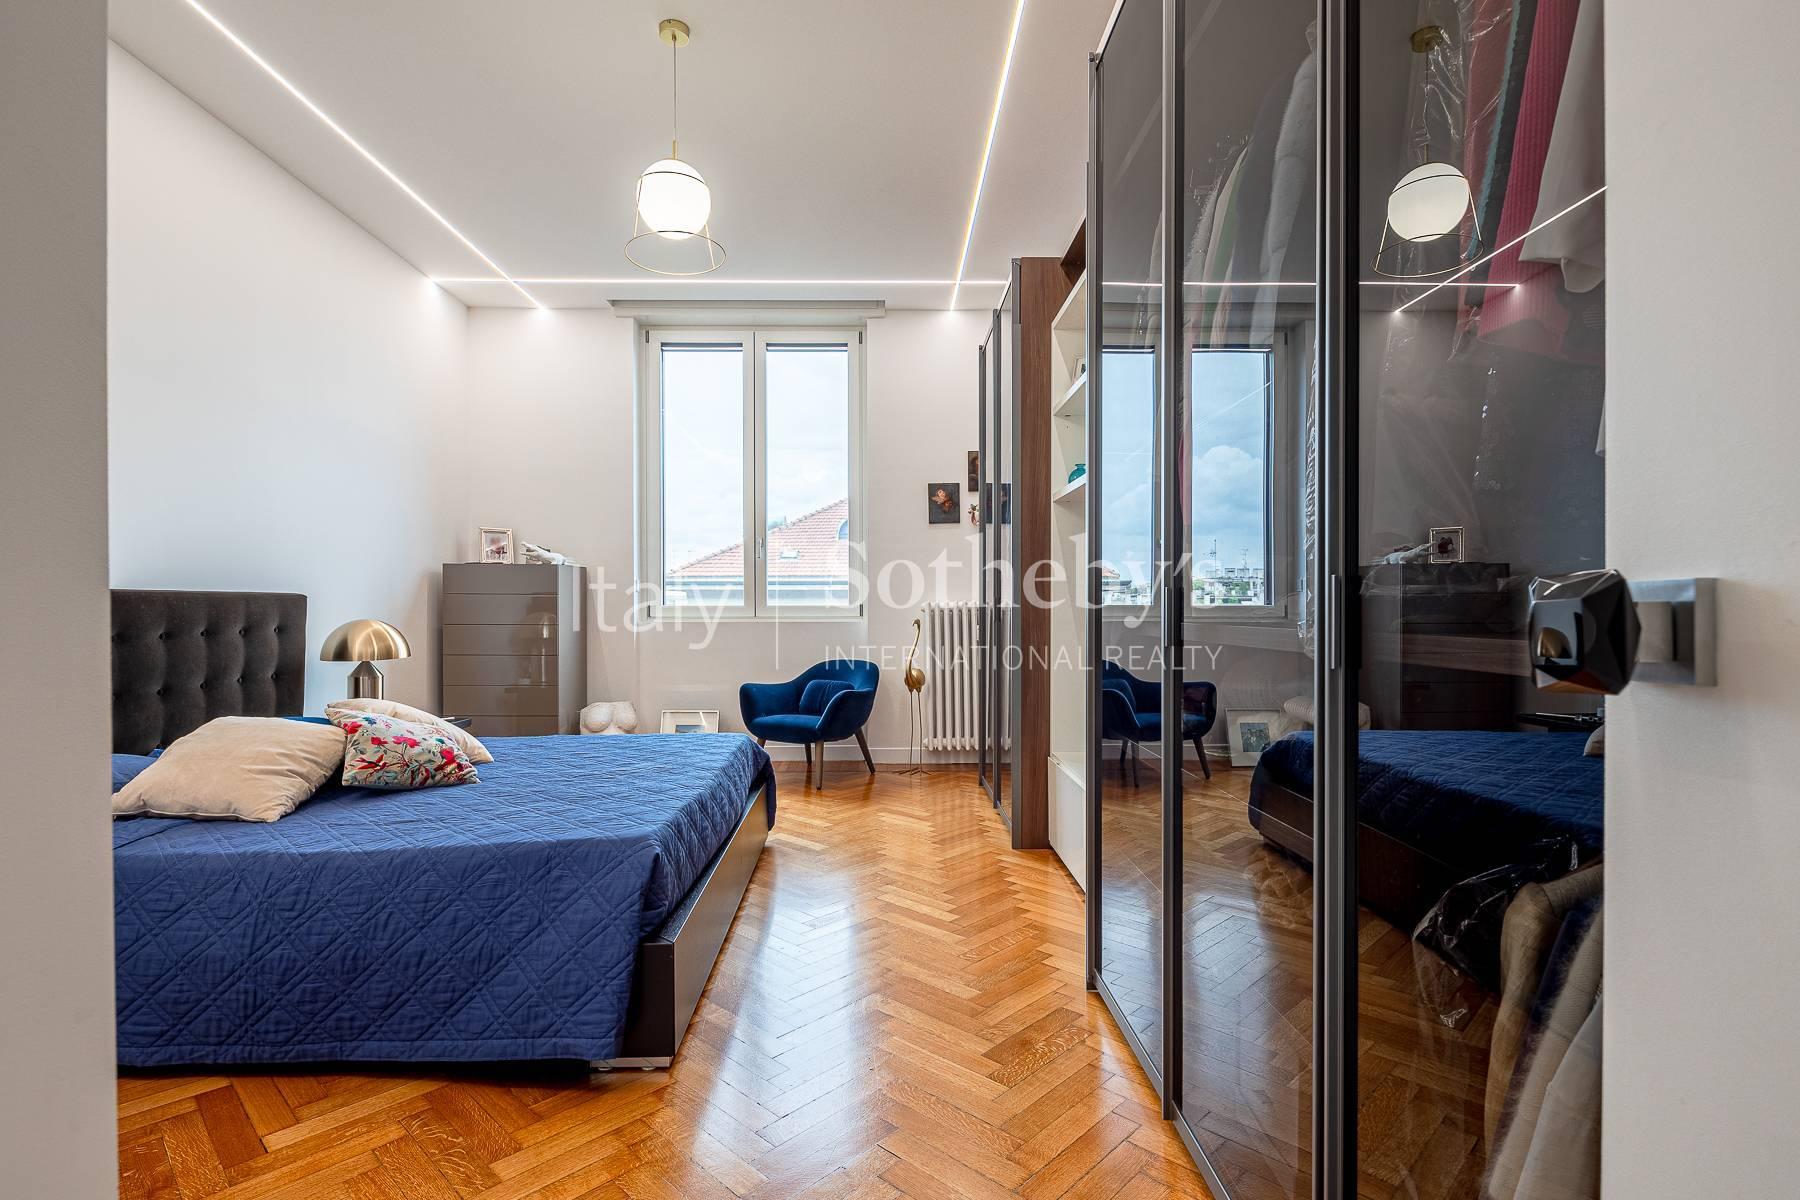 Superb furnished apartment in the Bianca di Savoia / Quadronno area - 10